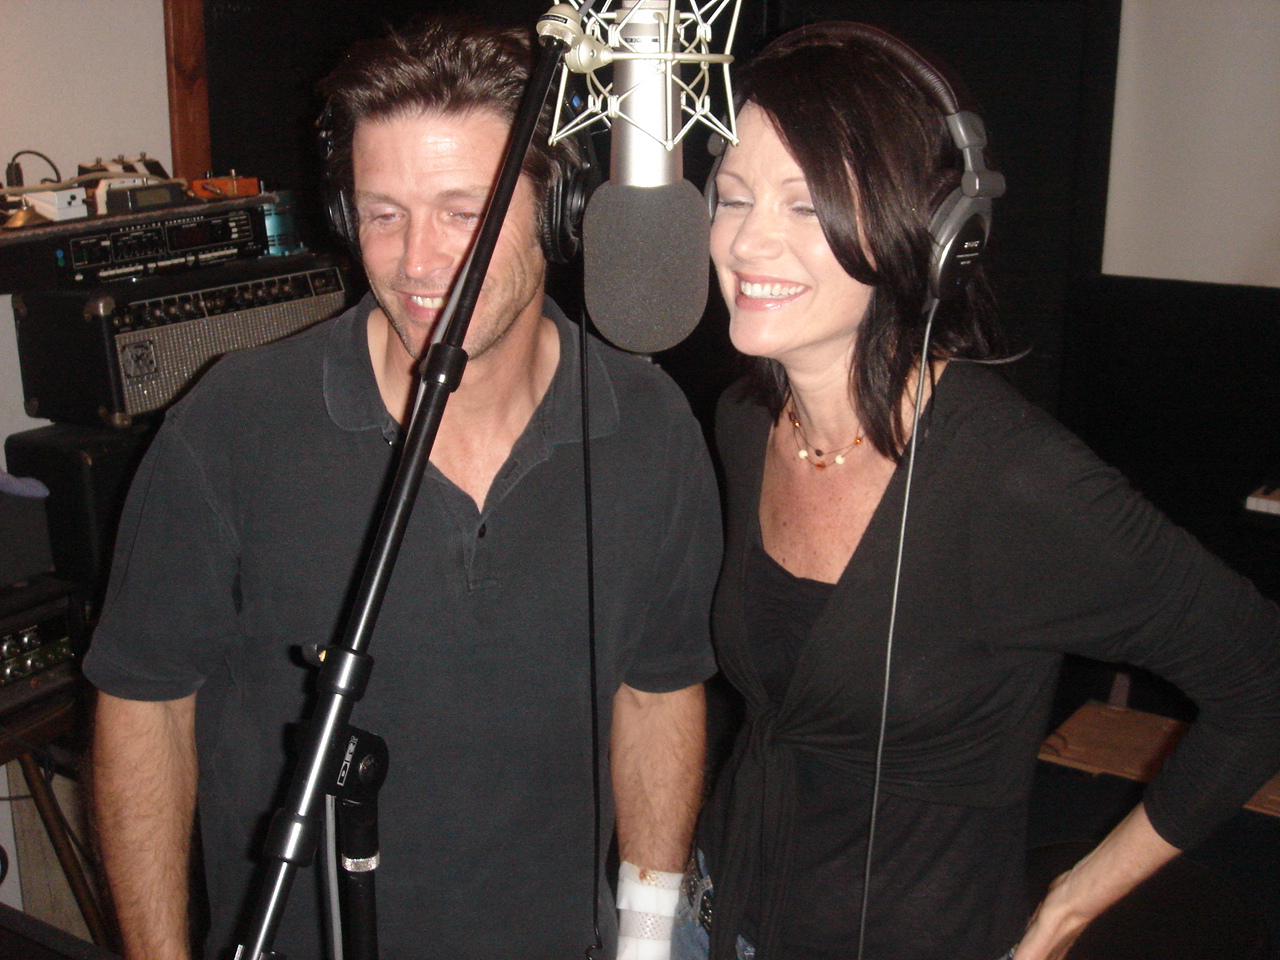 Douglas Swander and Kathleen LaGue record the original song 